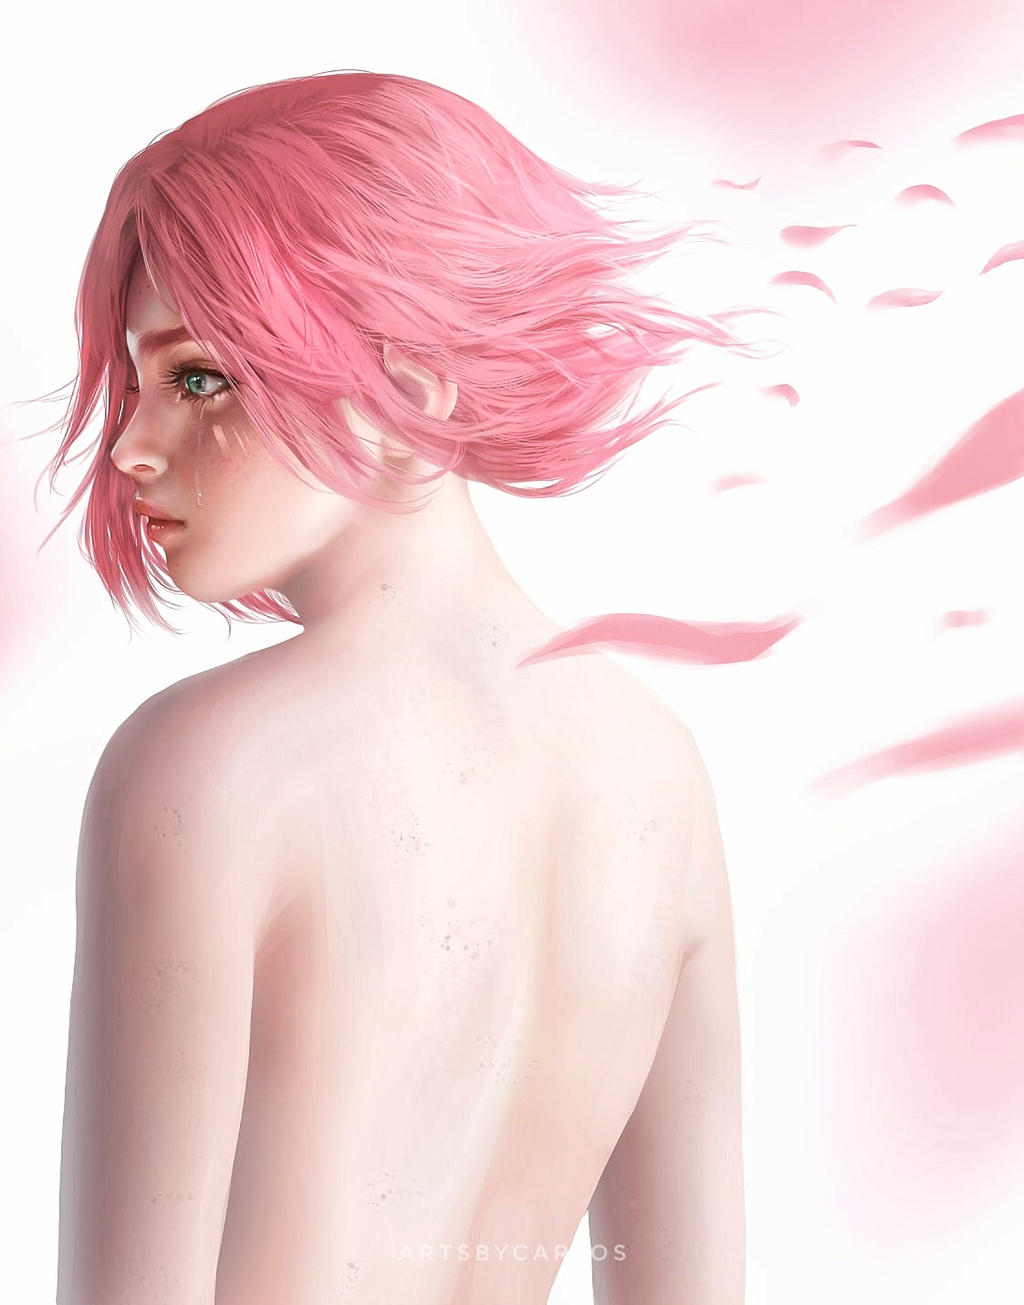 Sakura Haruno by artsbycarlos on DeviantArt